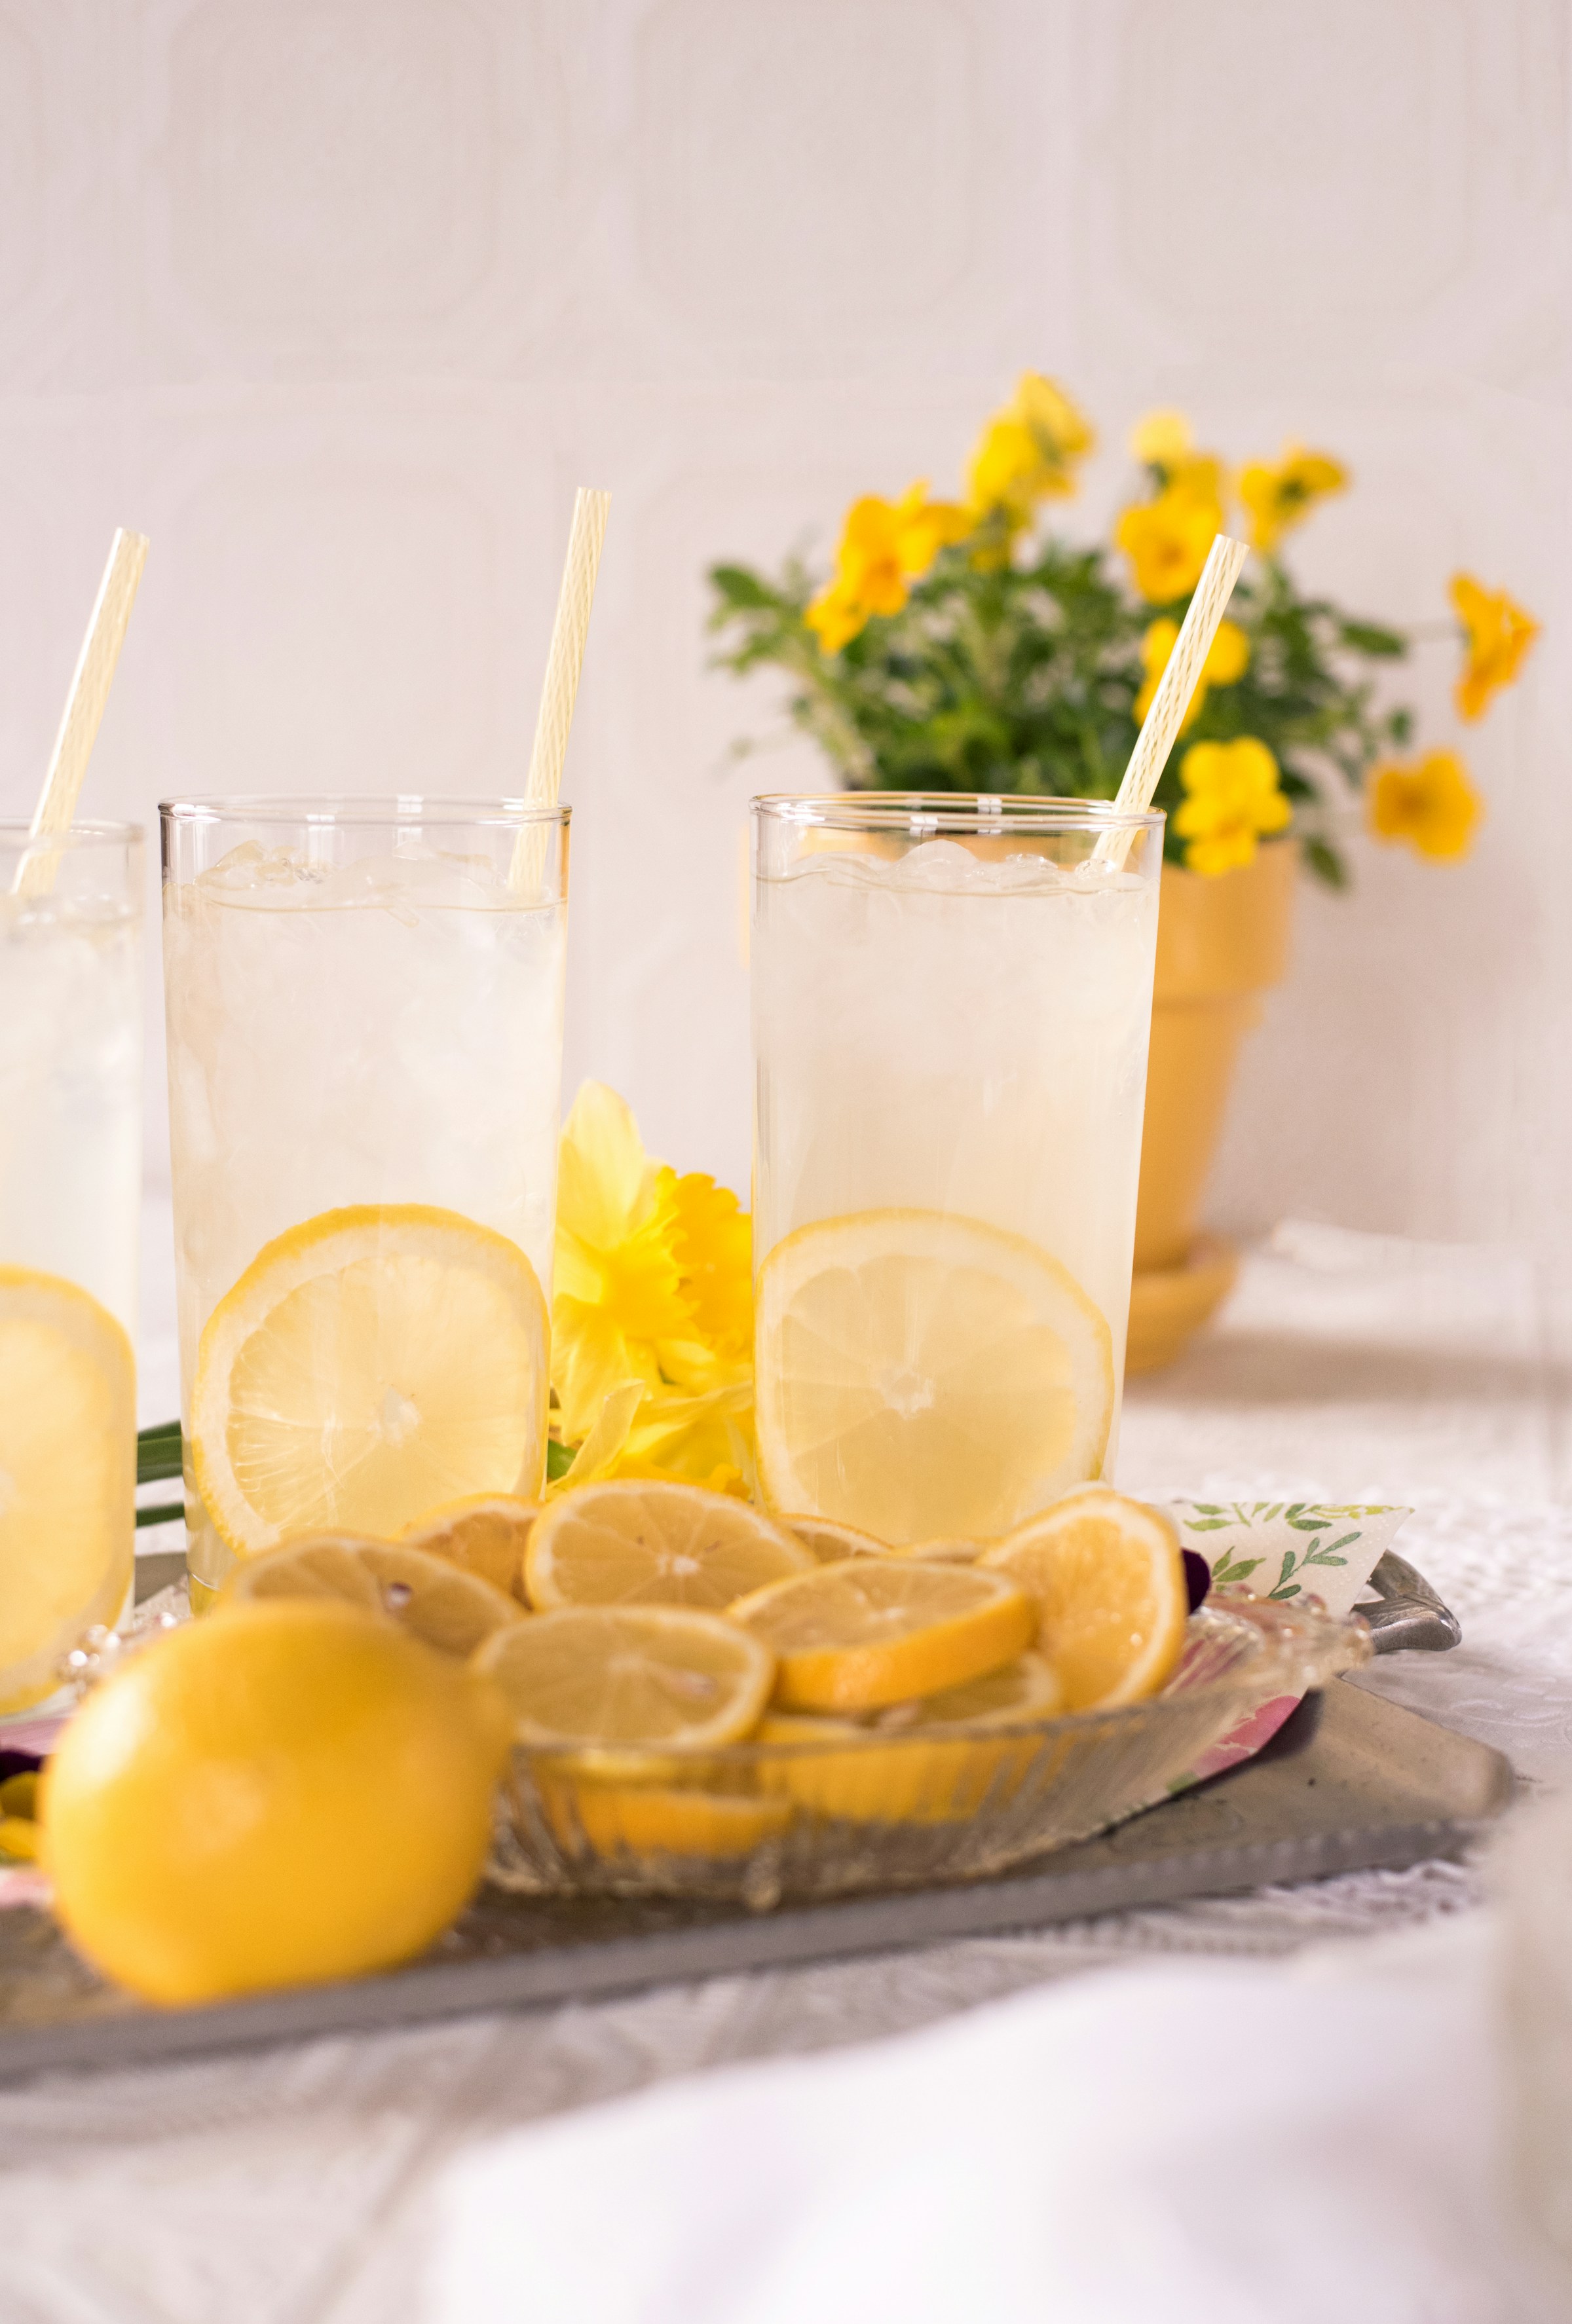 Verres de limonade | Source : Unsplash